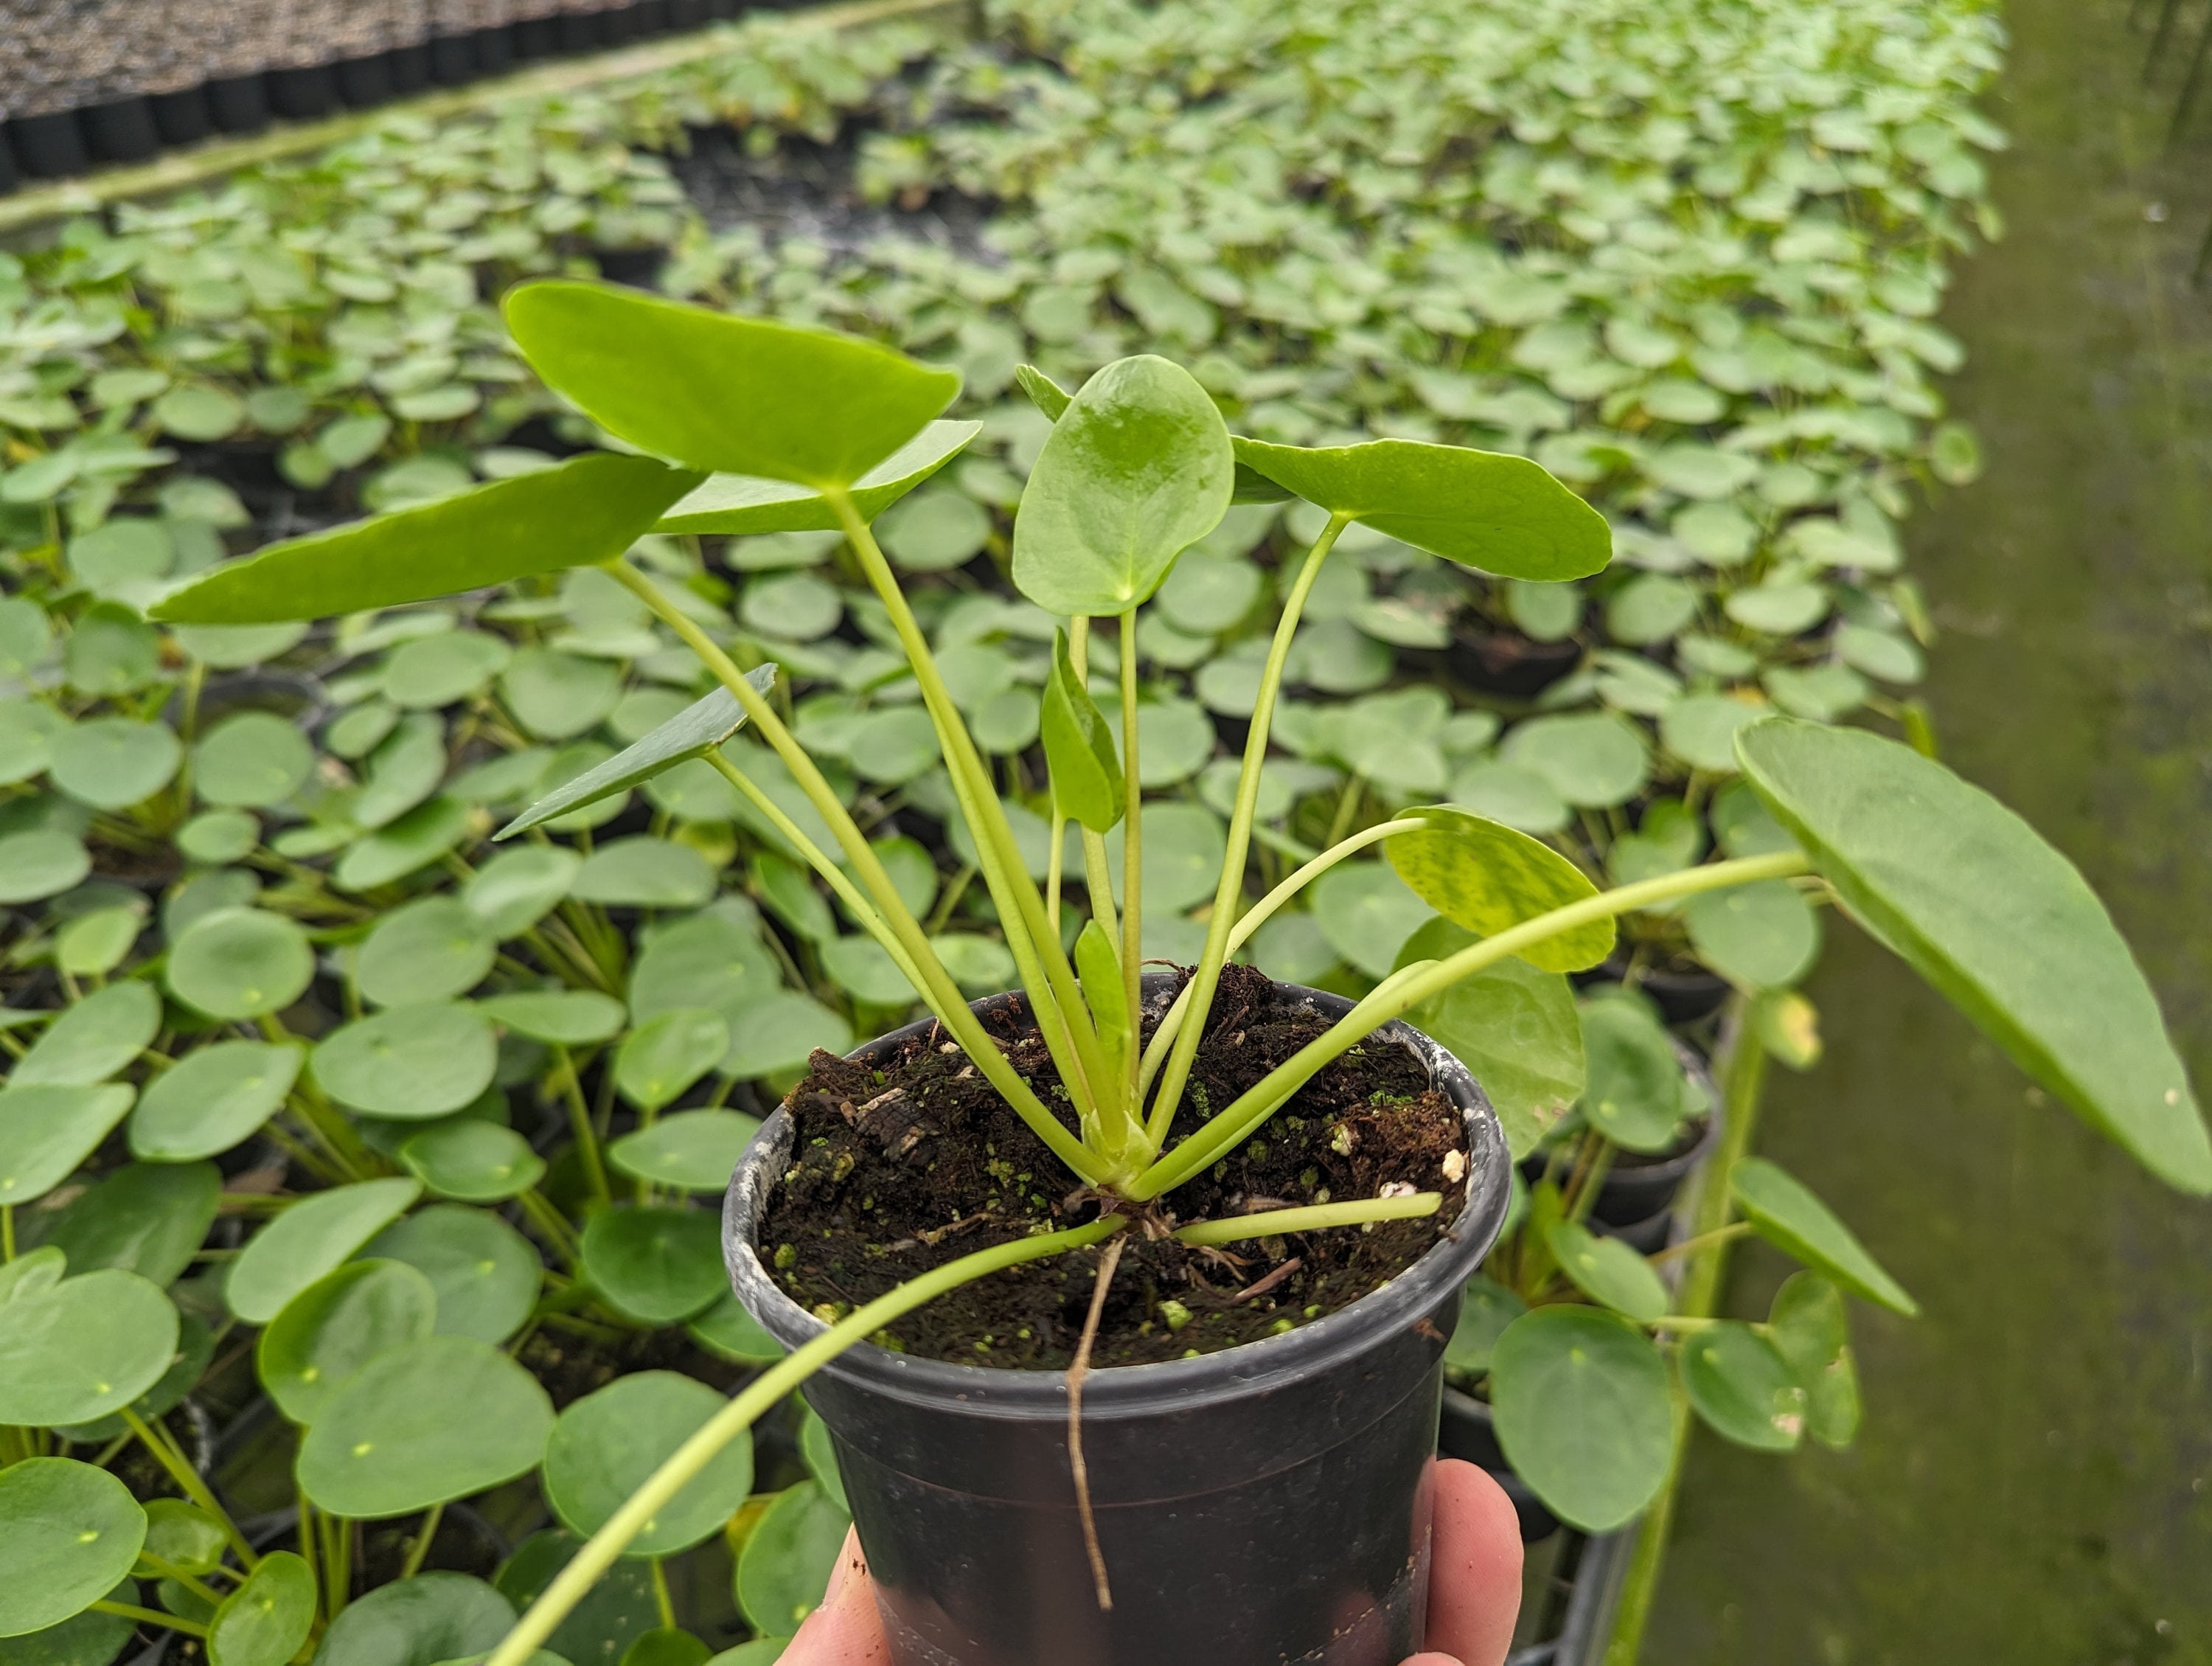 Pilea peperomiodes plant 4 inch pot